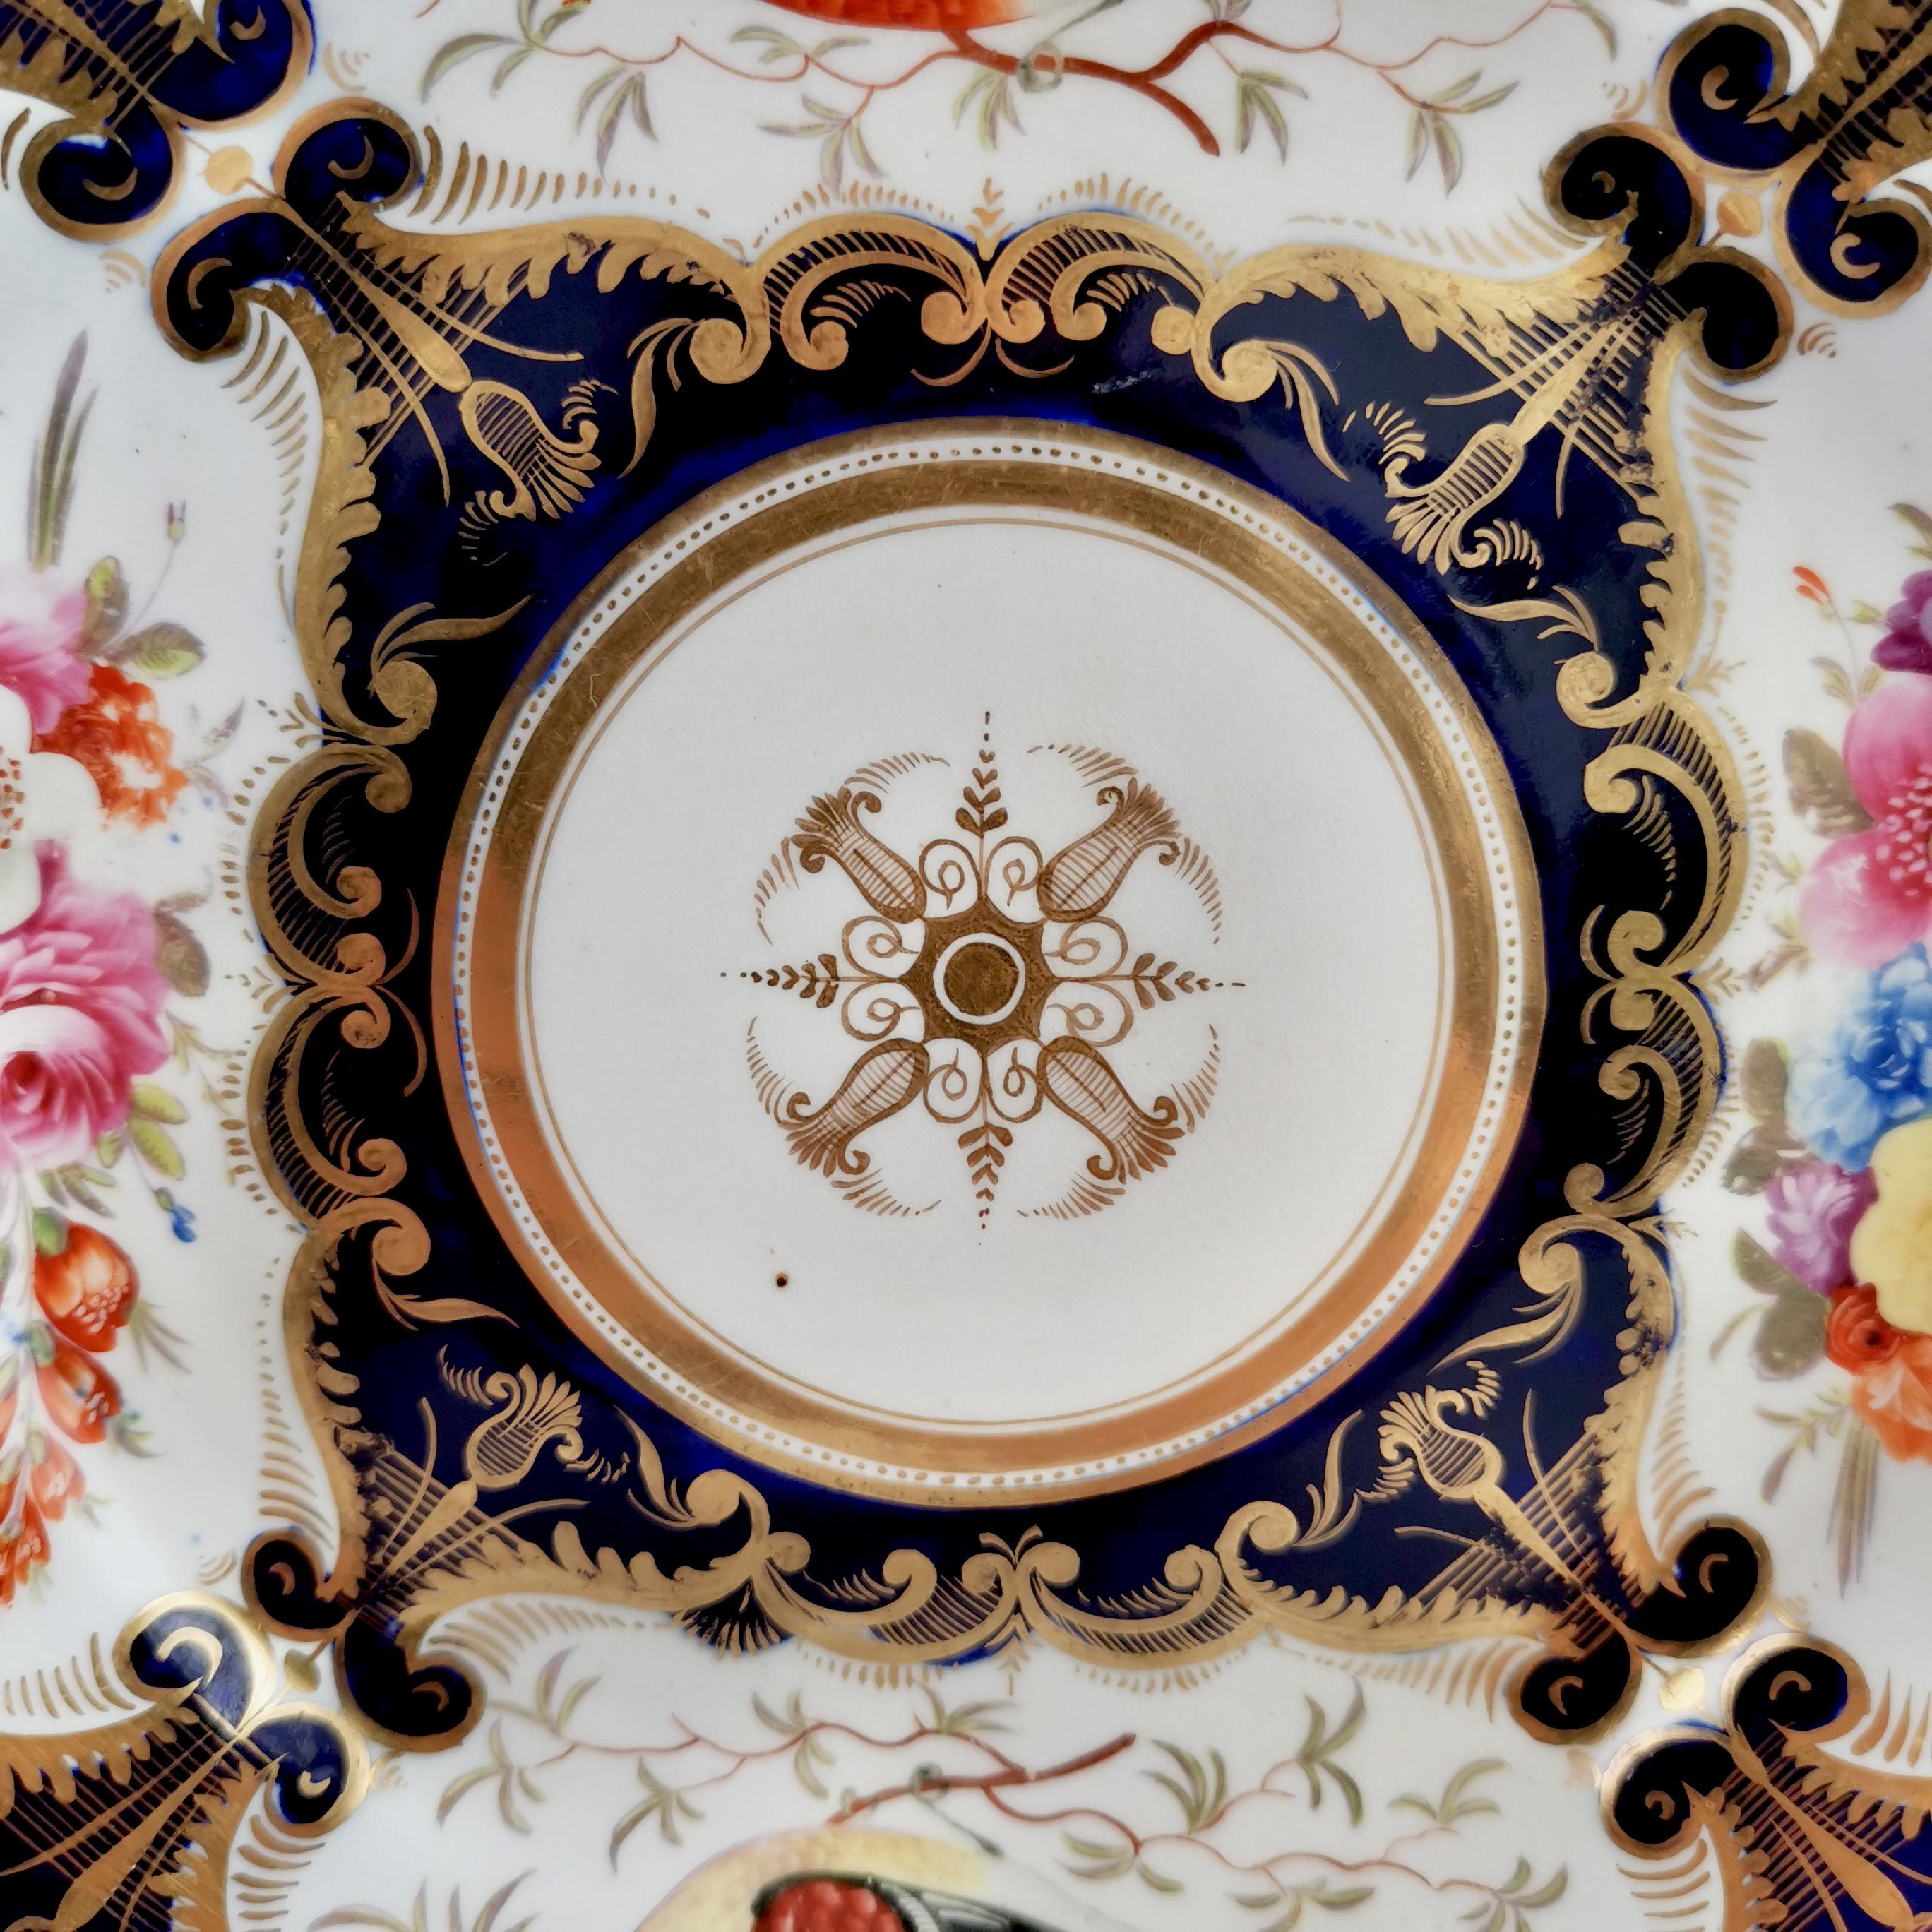 Early 19th Century Porcelain Plate Coalport, Cobalt Blue and Birds Patt. 759, Regency ca 1815